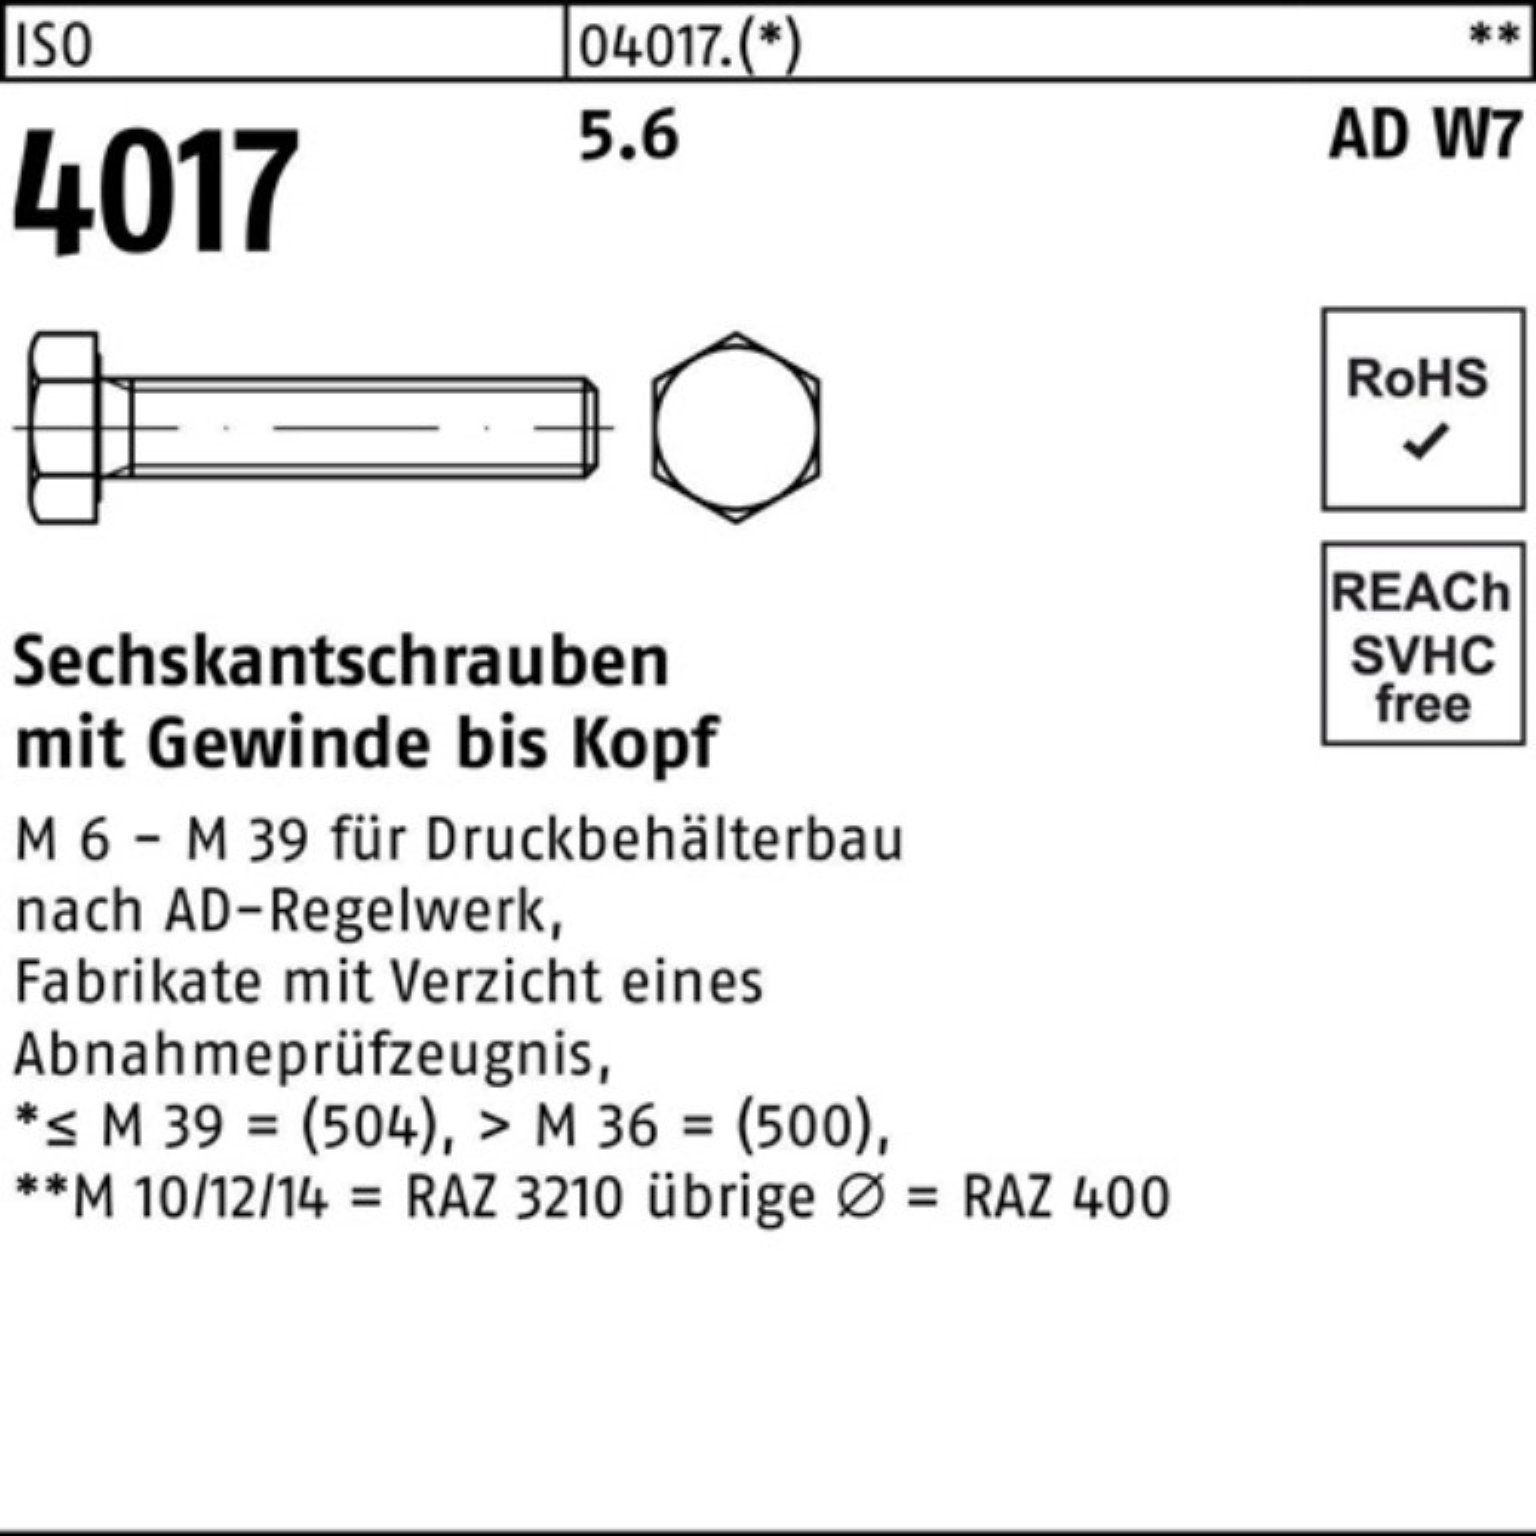 Sechskantschraube W7 Pack AD 60 ISO 100er 4017 5.6 M10x Stück VG Sechskantschraube Bufab 100